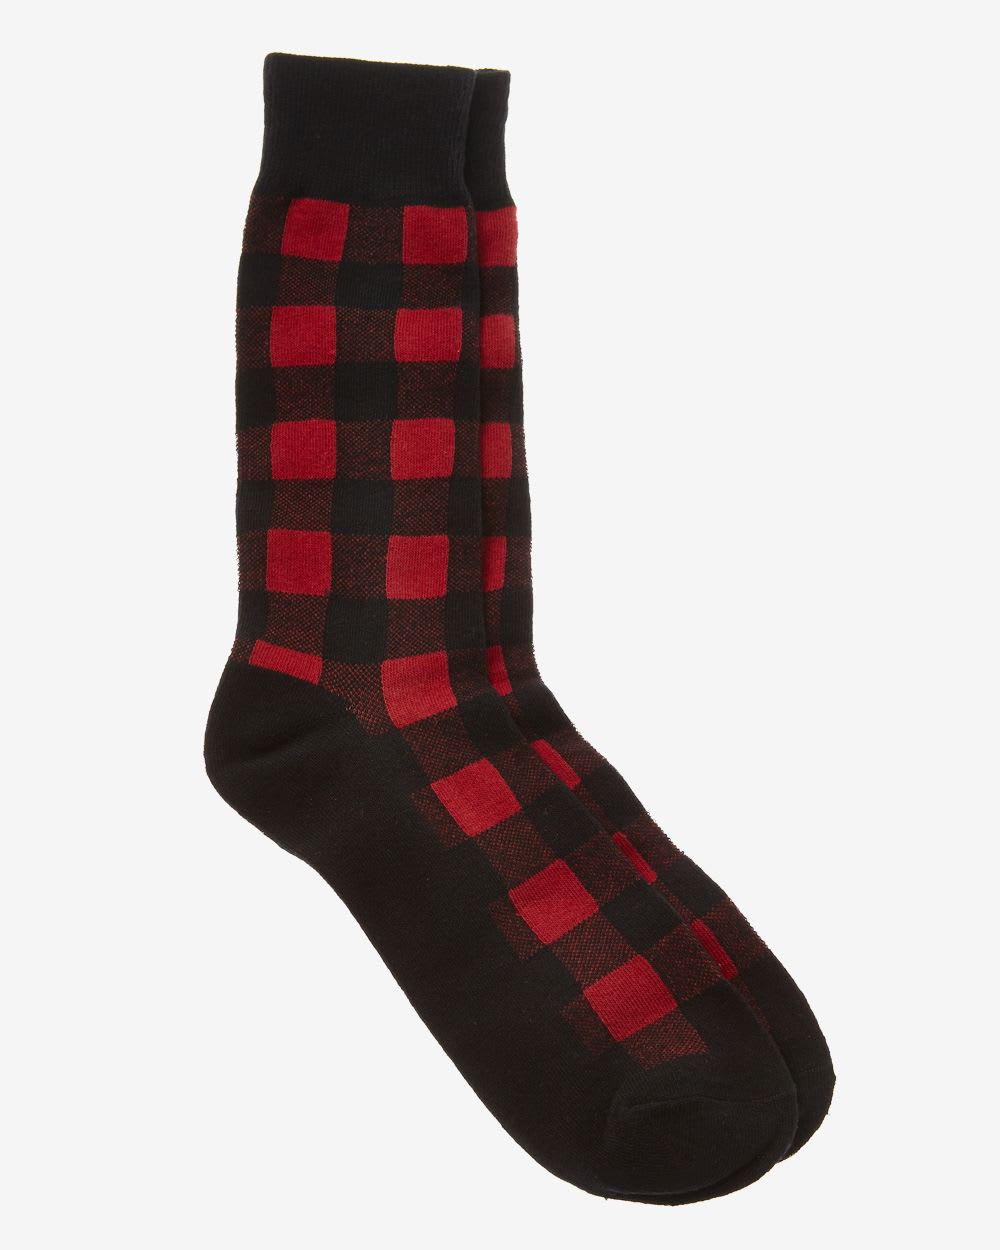 Men's check socks | RW&CO.